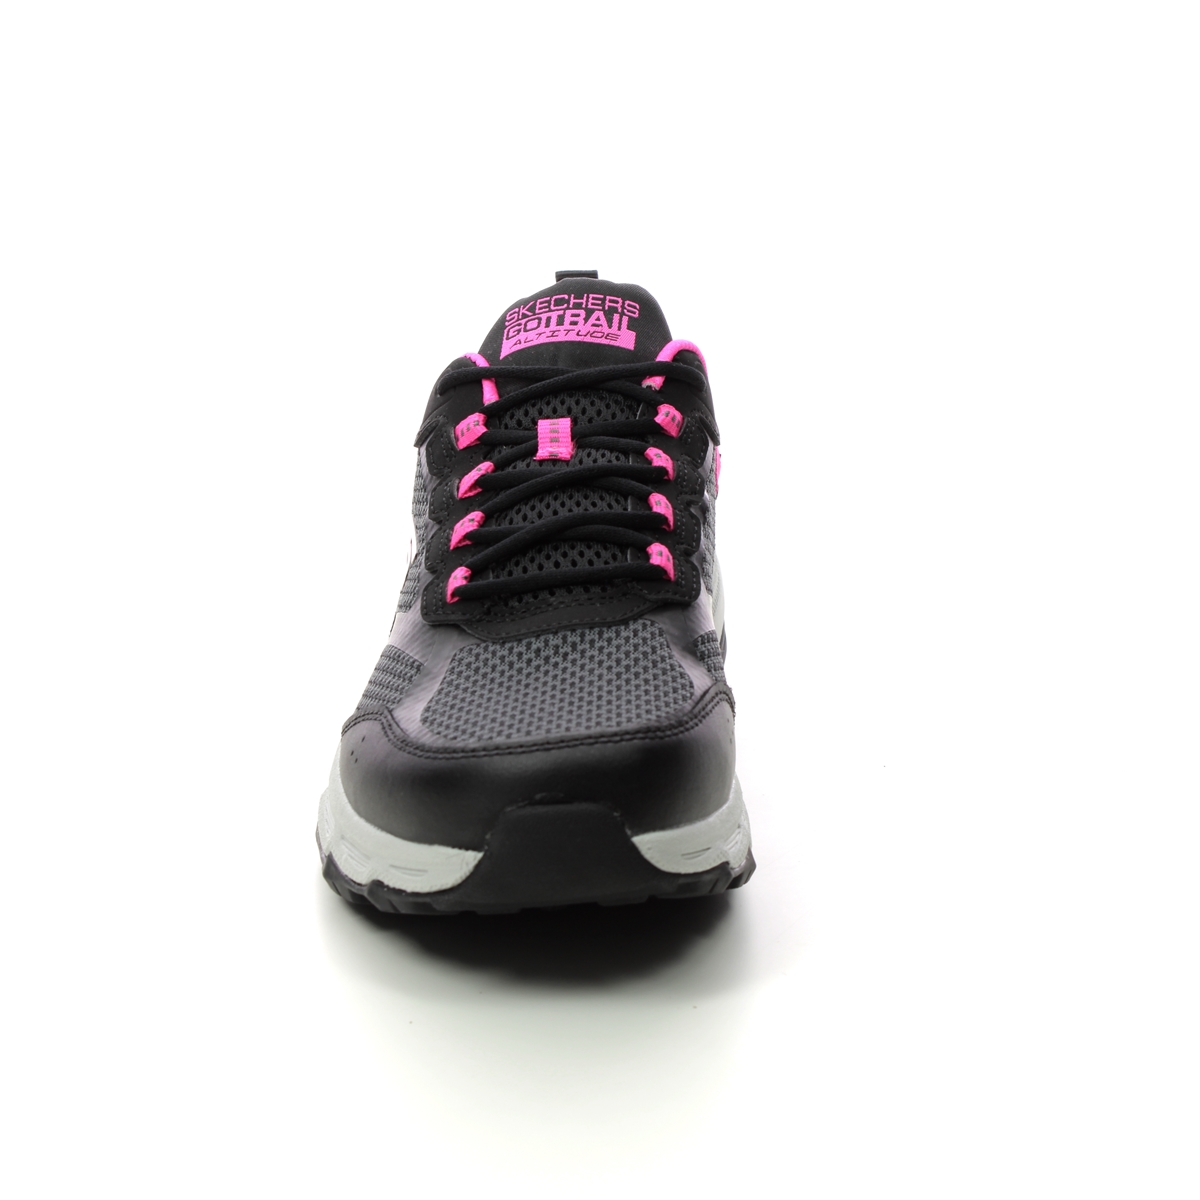 Skechers Go Run Trail BKPK Black pink Womens trainers 128200